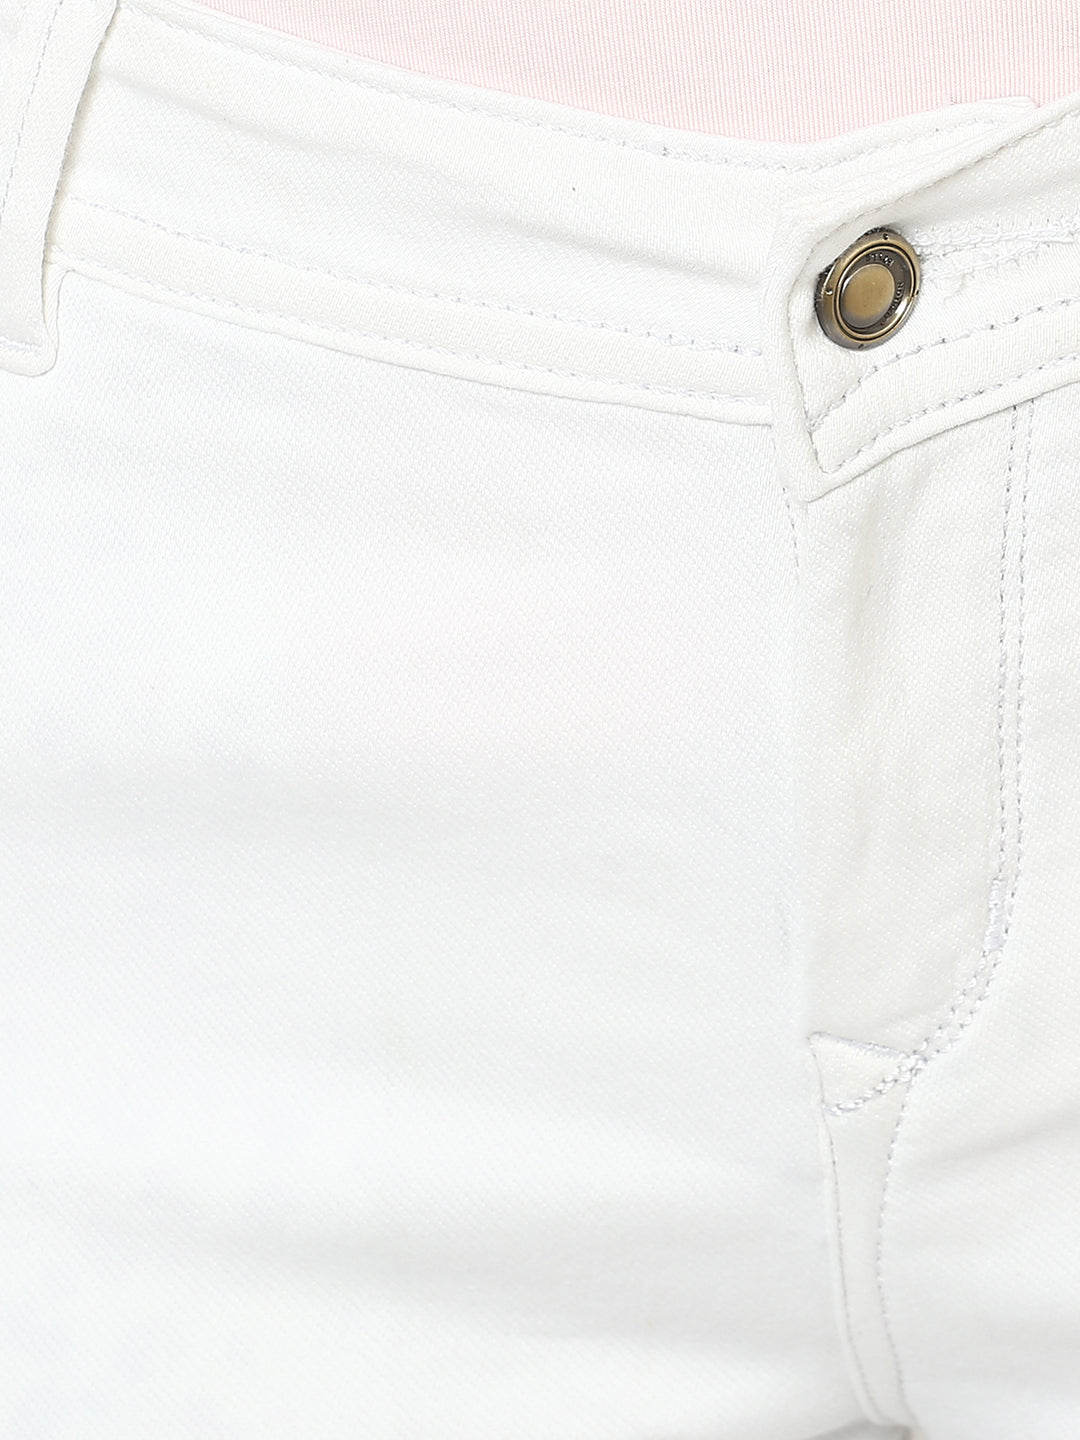 Women's Lycra Denim White Jeans